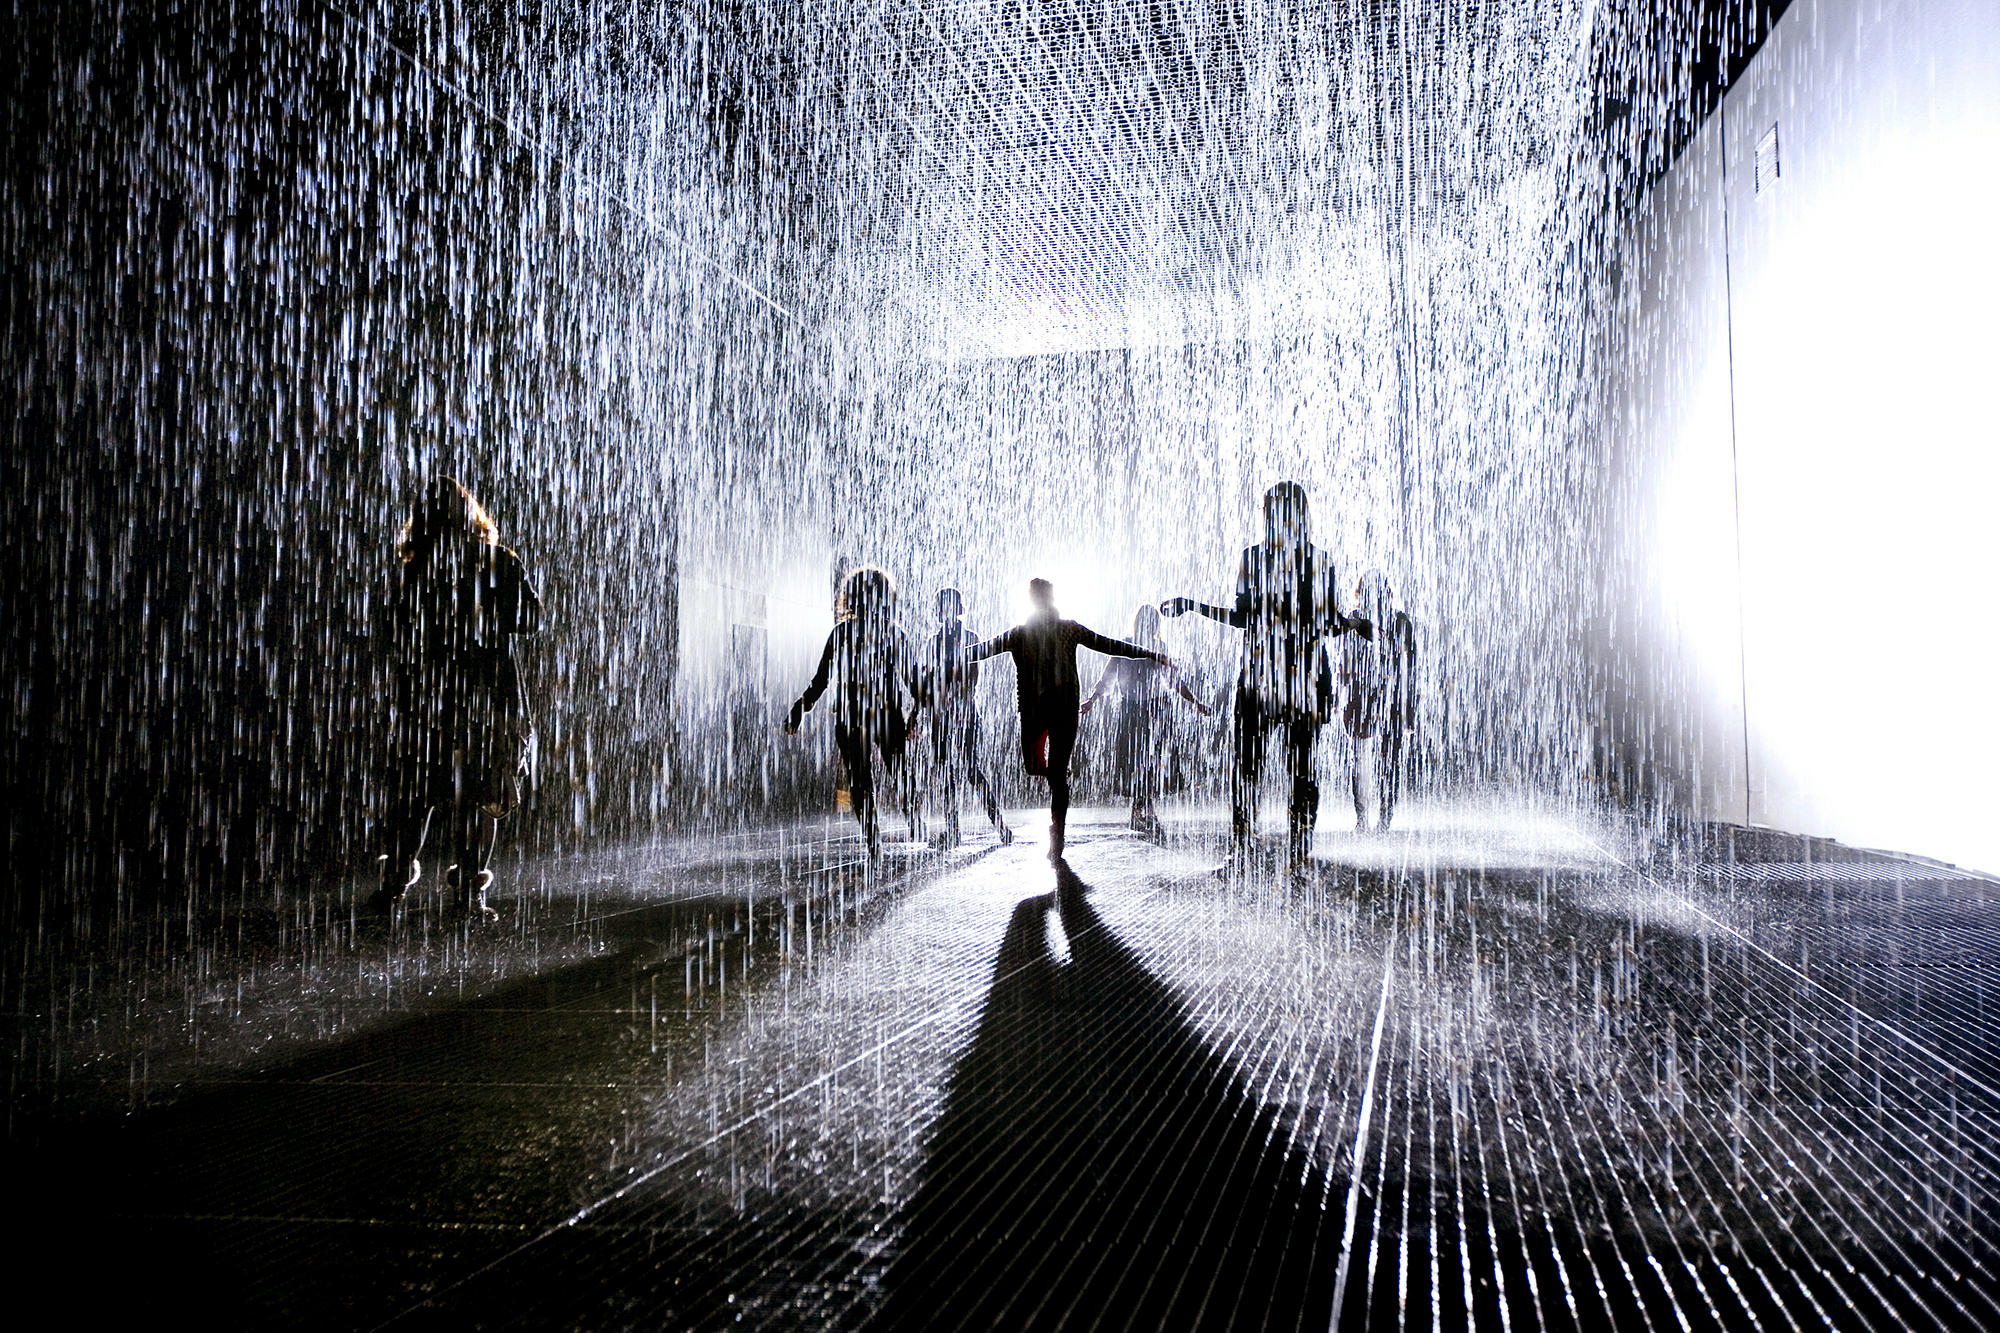 Barbican Rain Room - Credit to Felix Clay